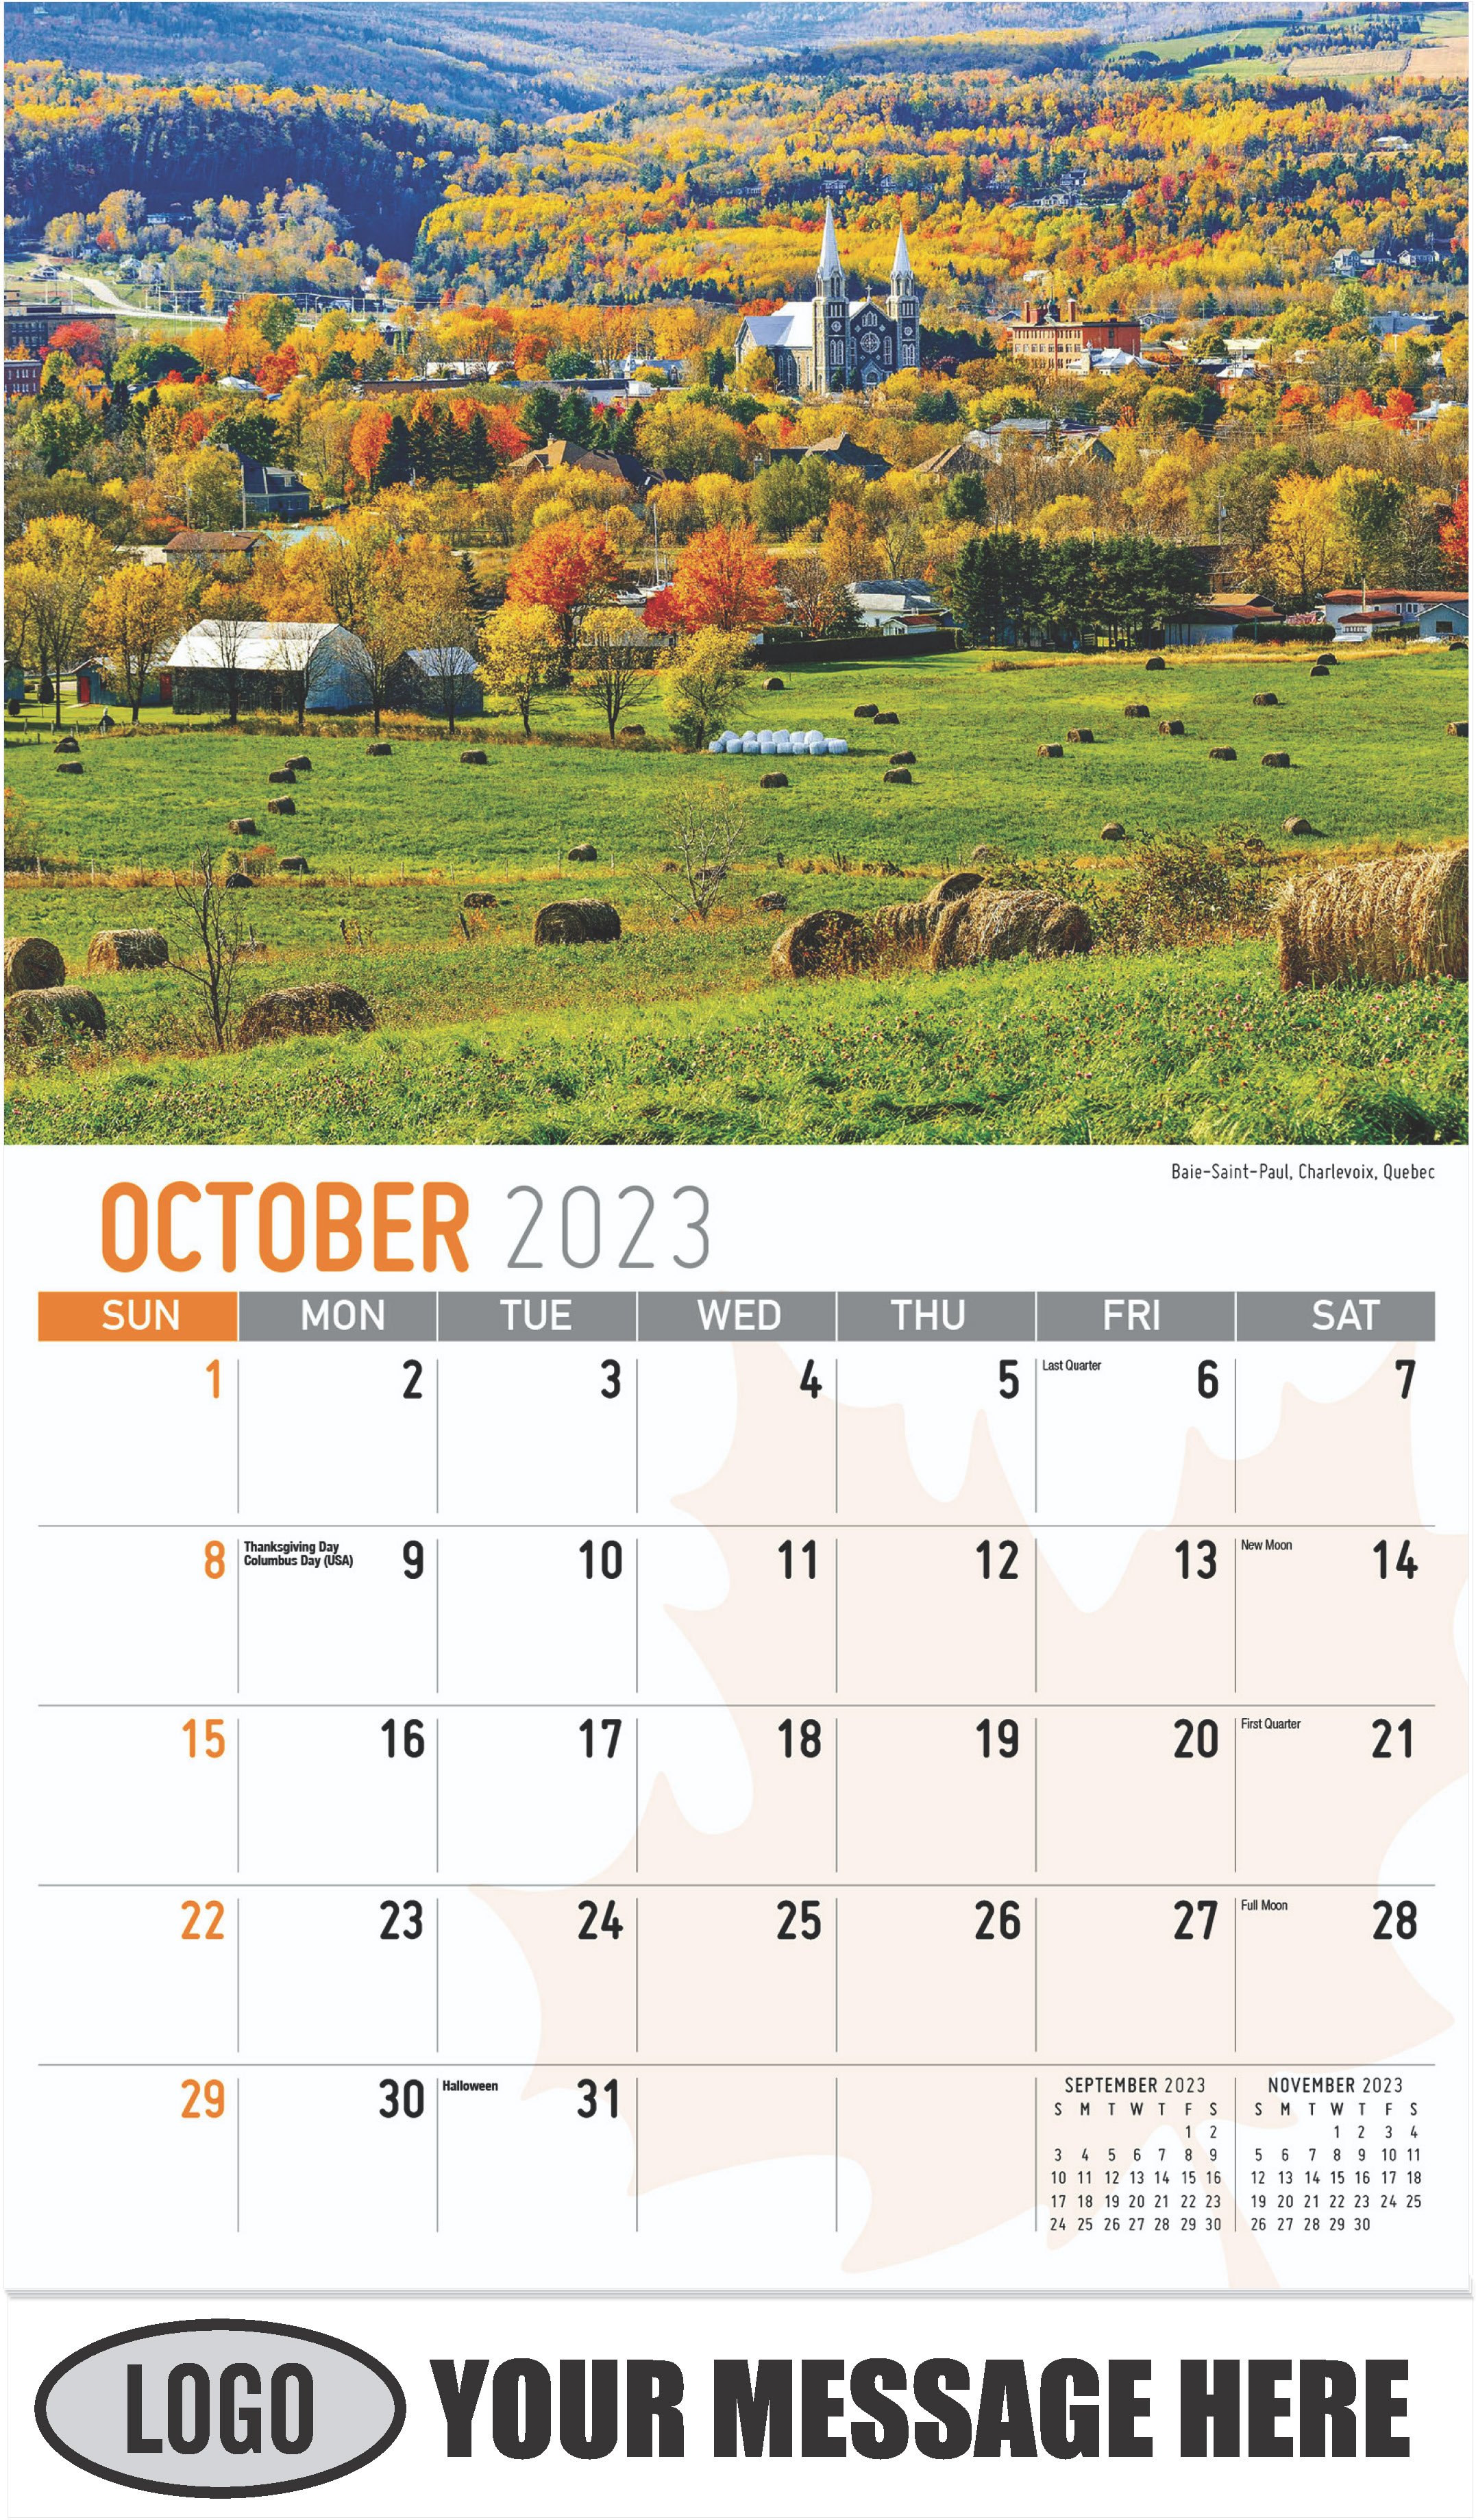 Baie-Saint-Paul, Charlevoix, Quebec - October - Scenes of Canada 2023 Promotional Calendar